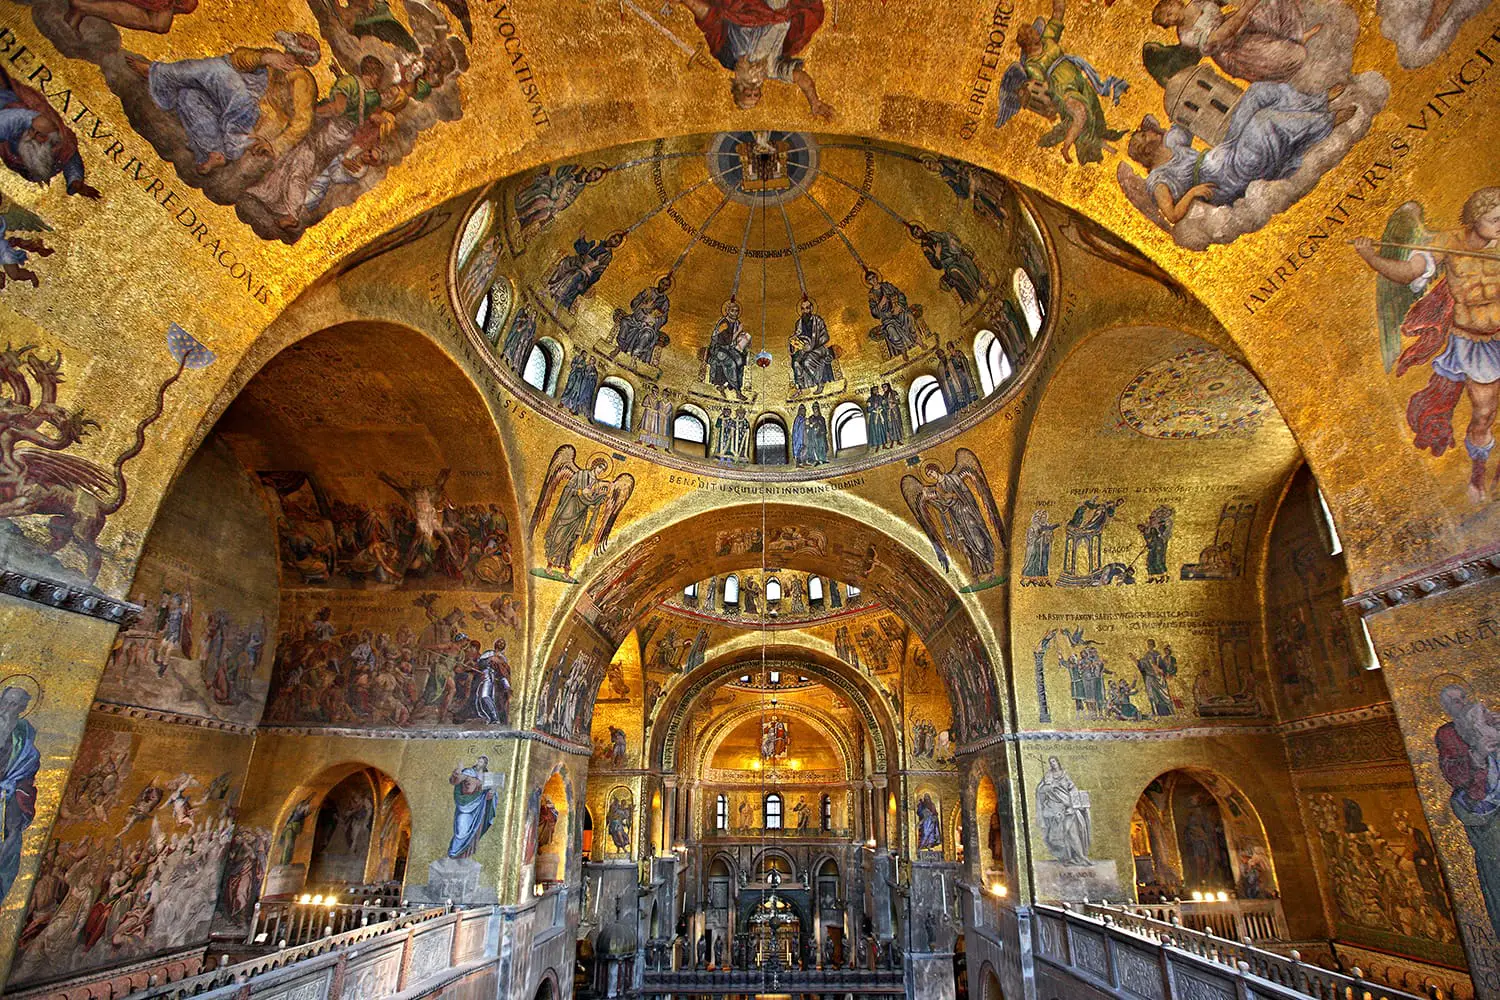 Amazing mosaics inside the Basilica di San Marco, Venice, Italy